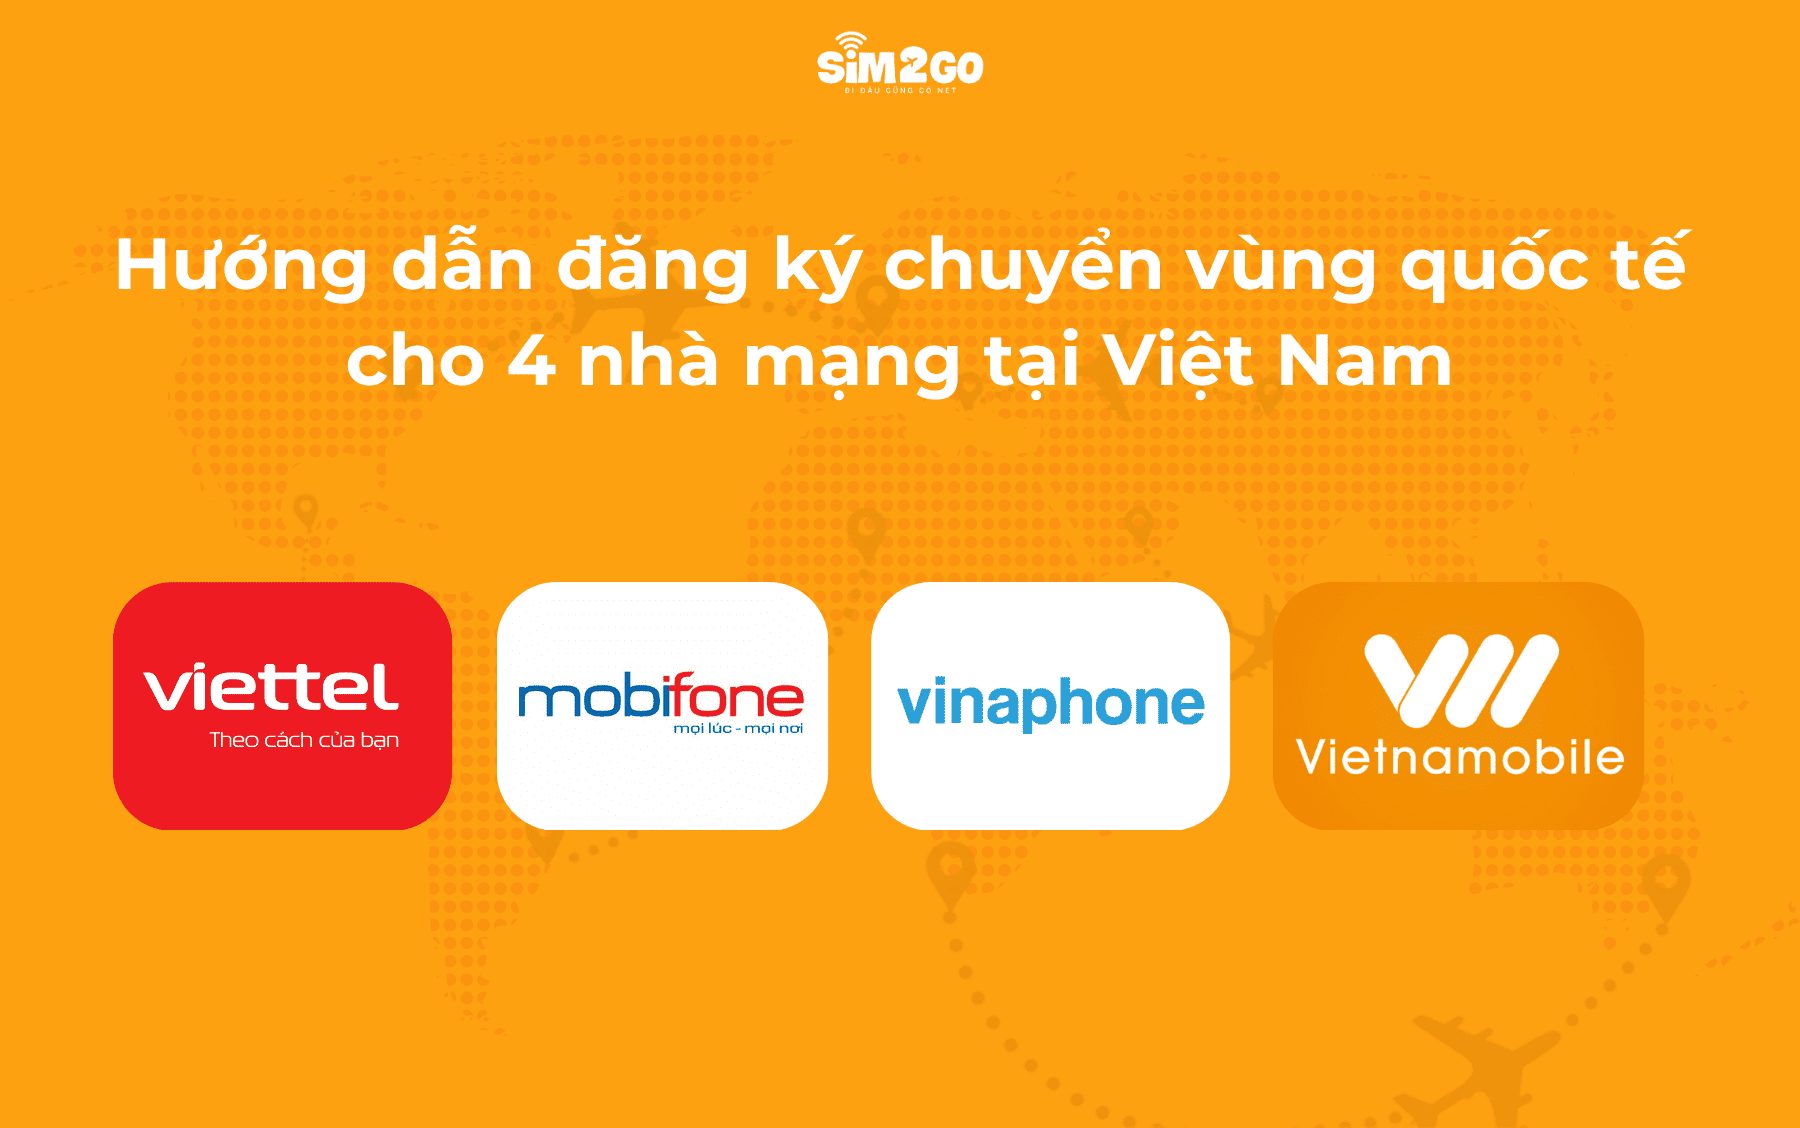 cach-chuyen-vung-quoc-te-viettel-mobifone-vinaphone-vietnamobile